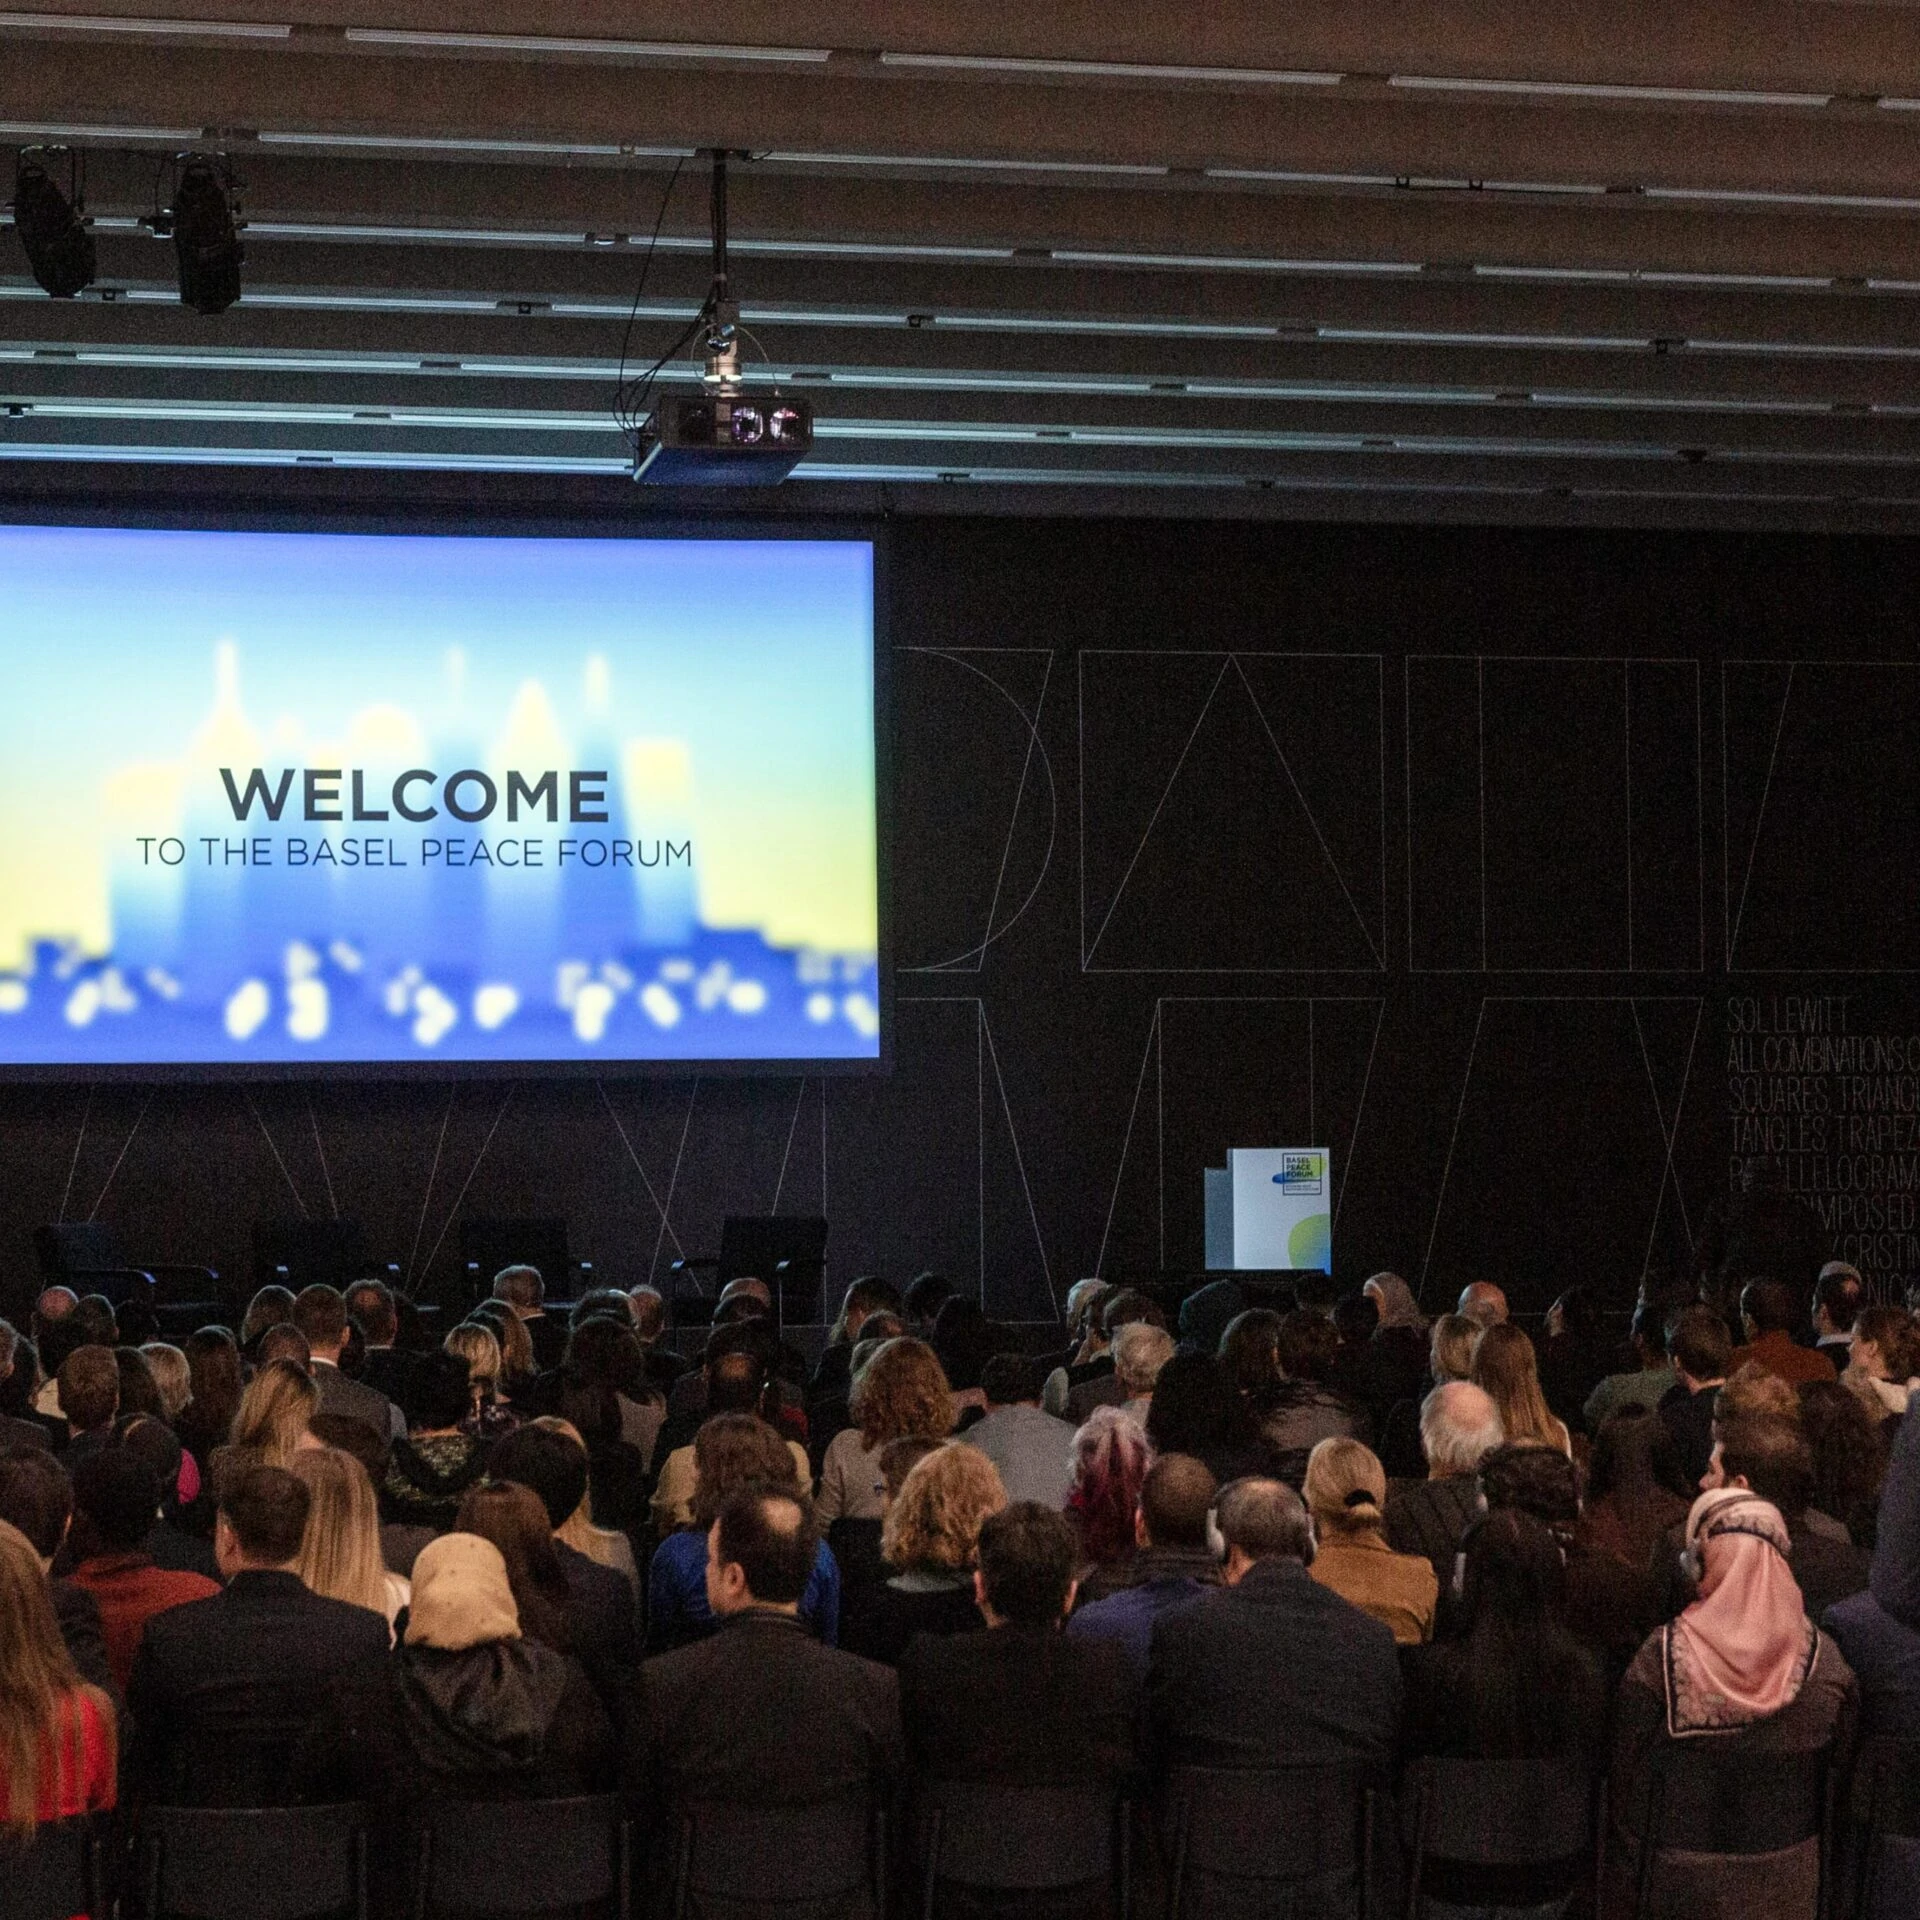 Leinwand mit Beamerbild: Welcome to the Basel Peace Forum. Publikum im abgedunkelten Saal.